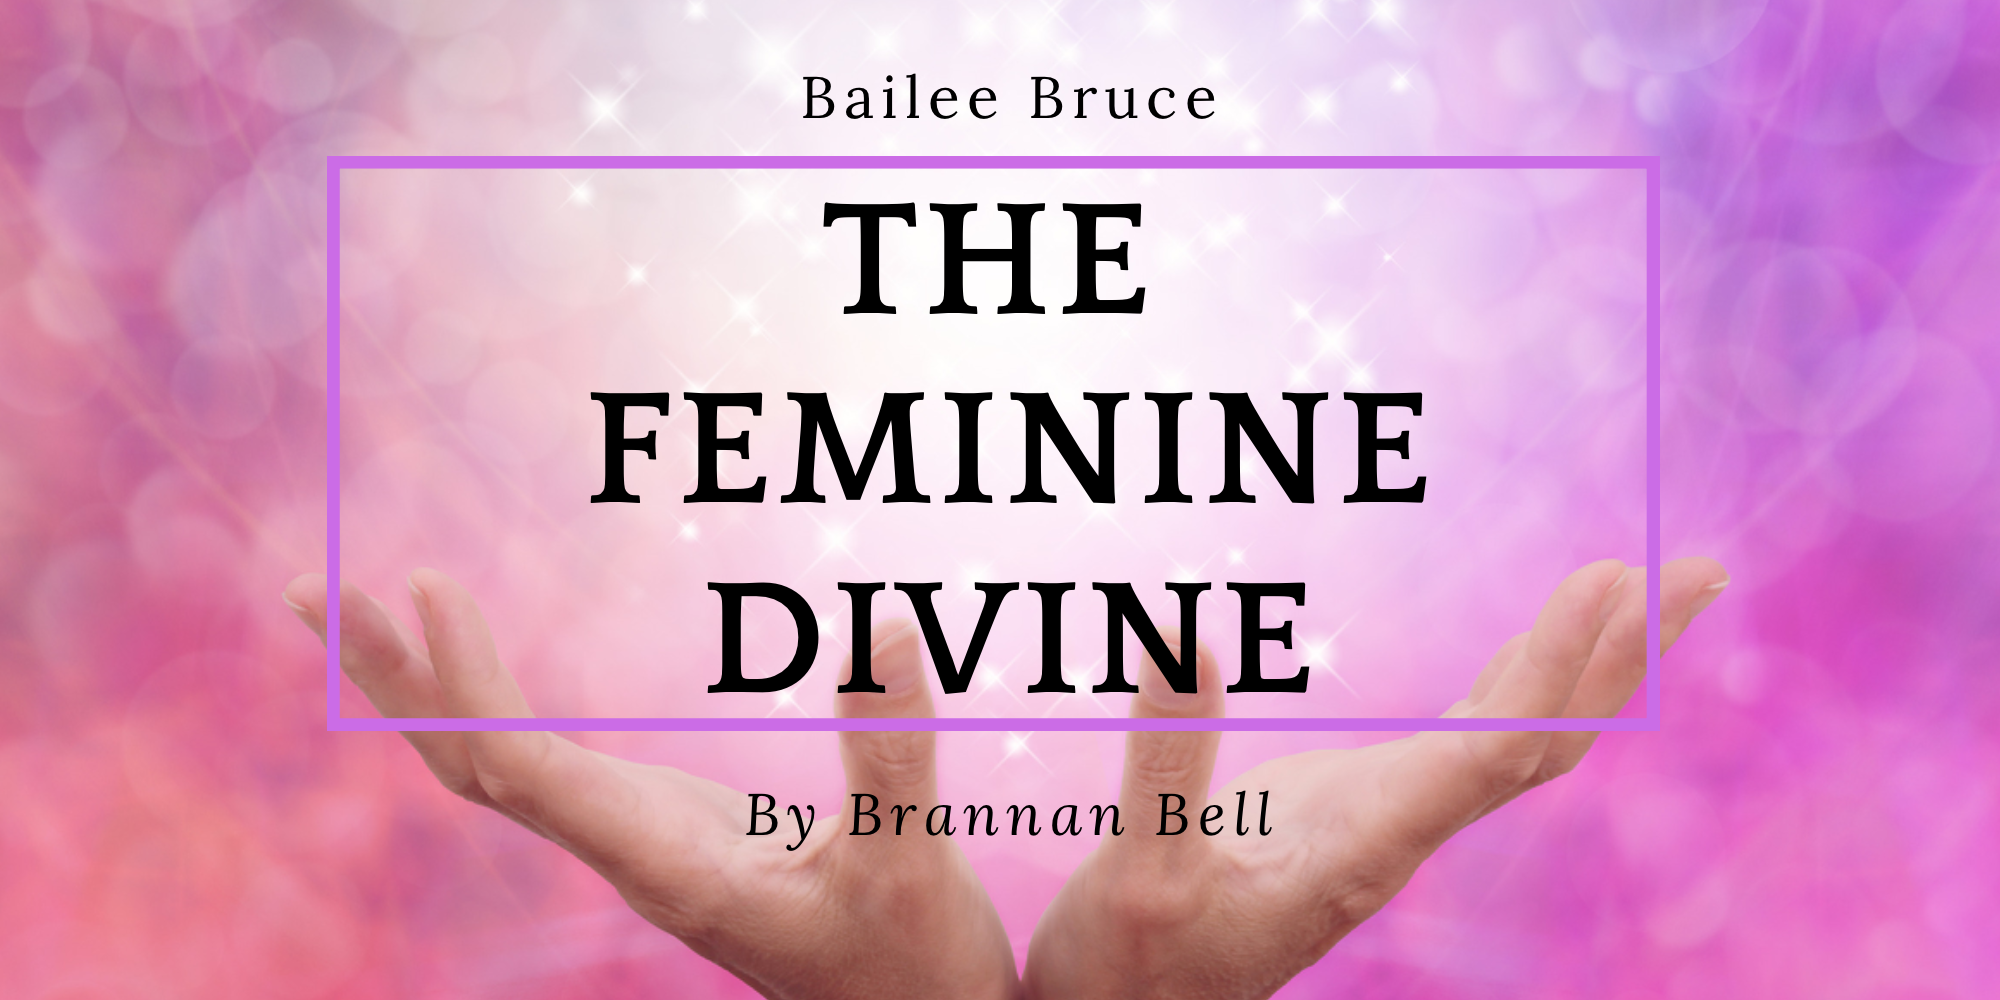 Feminine Divine: Bailee Bruce